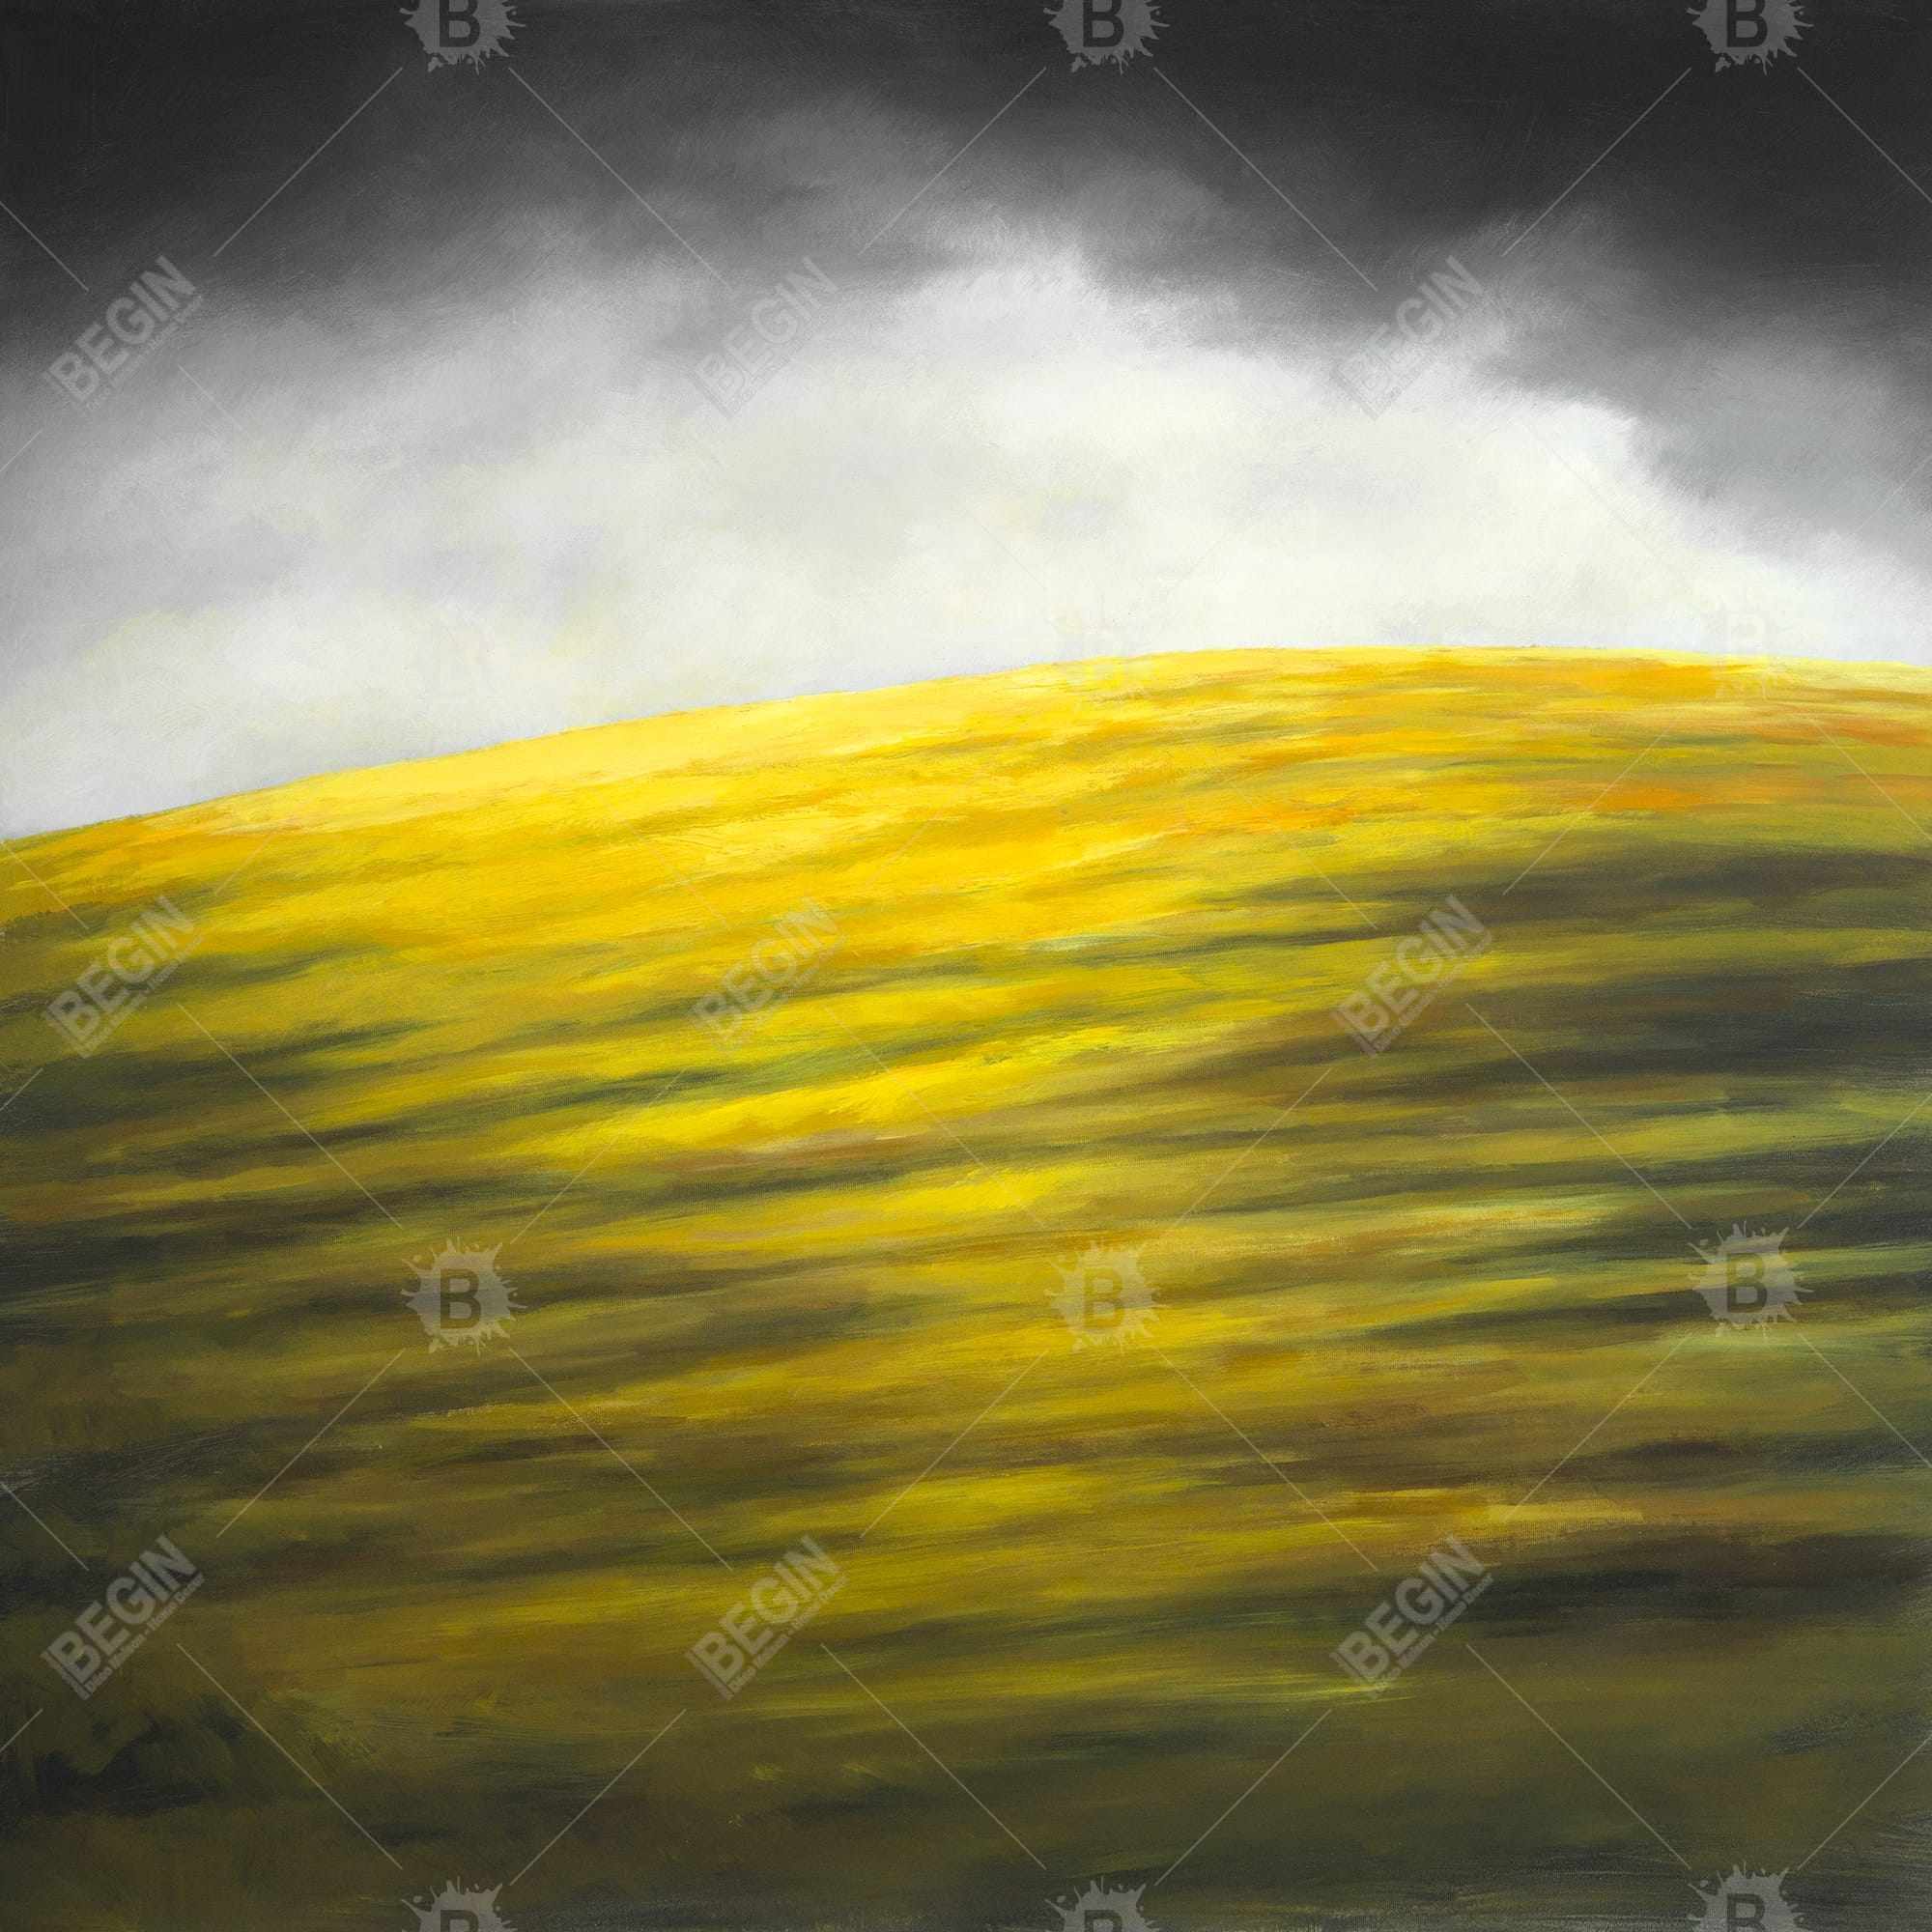 Yellow hill